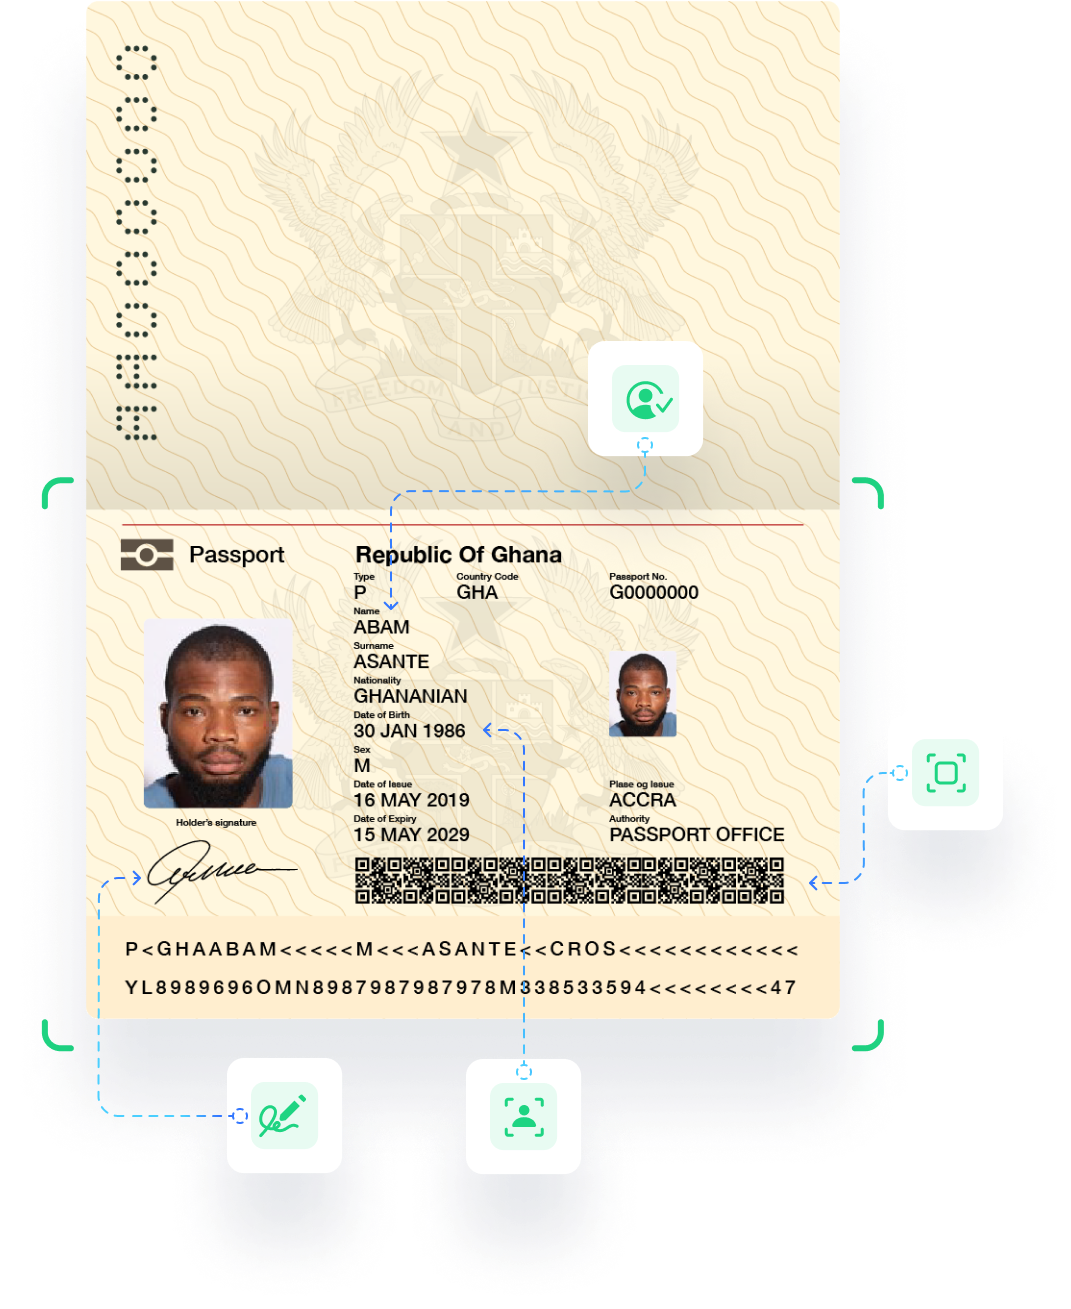 Passport digital identity verification services in Ghana